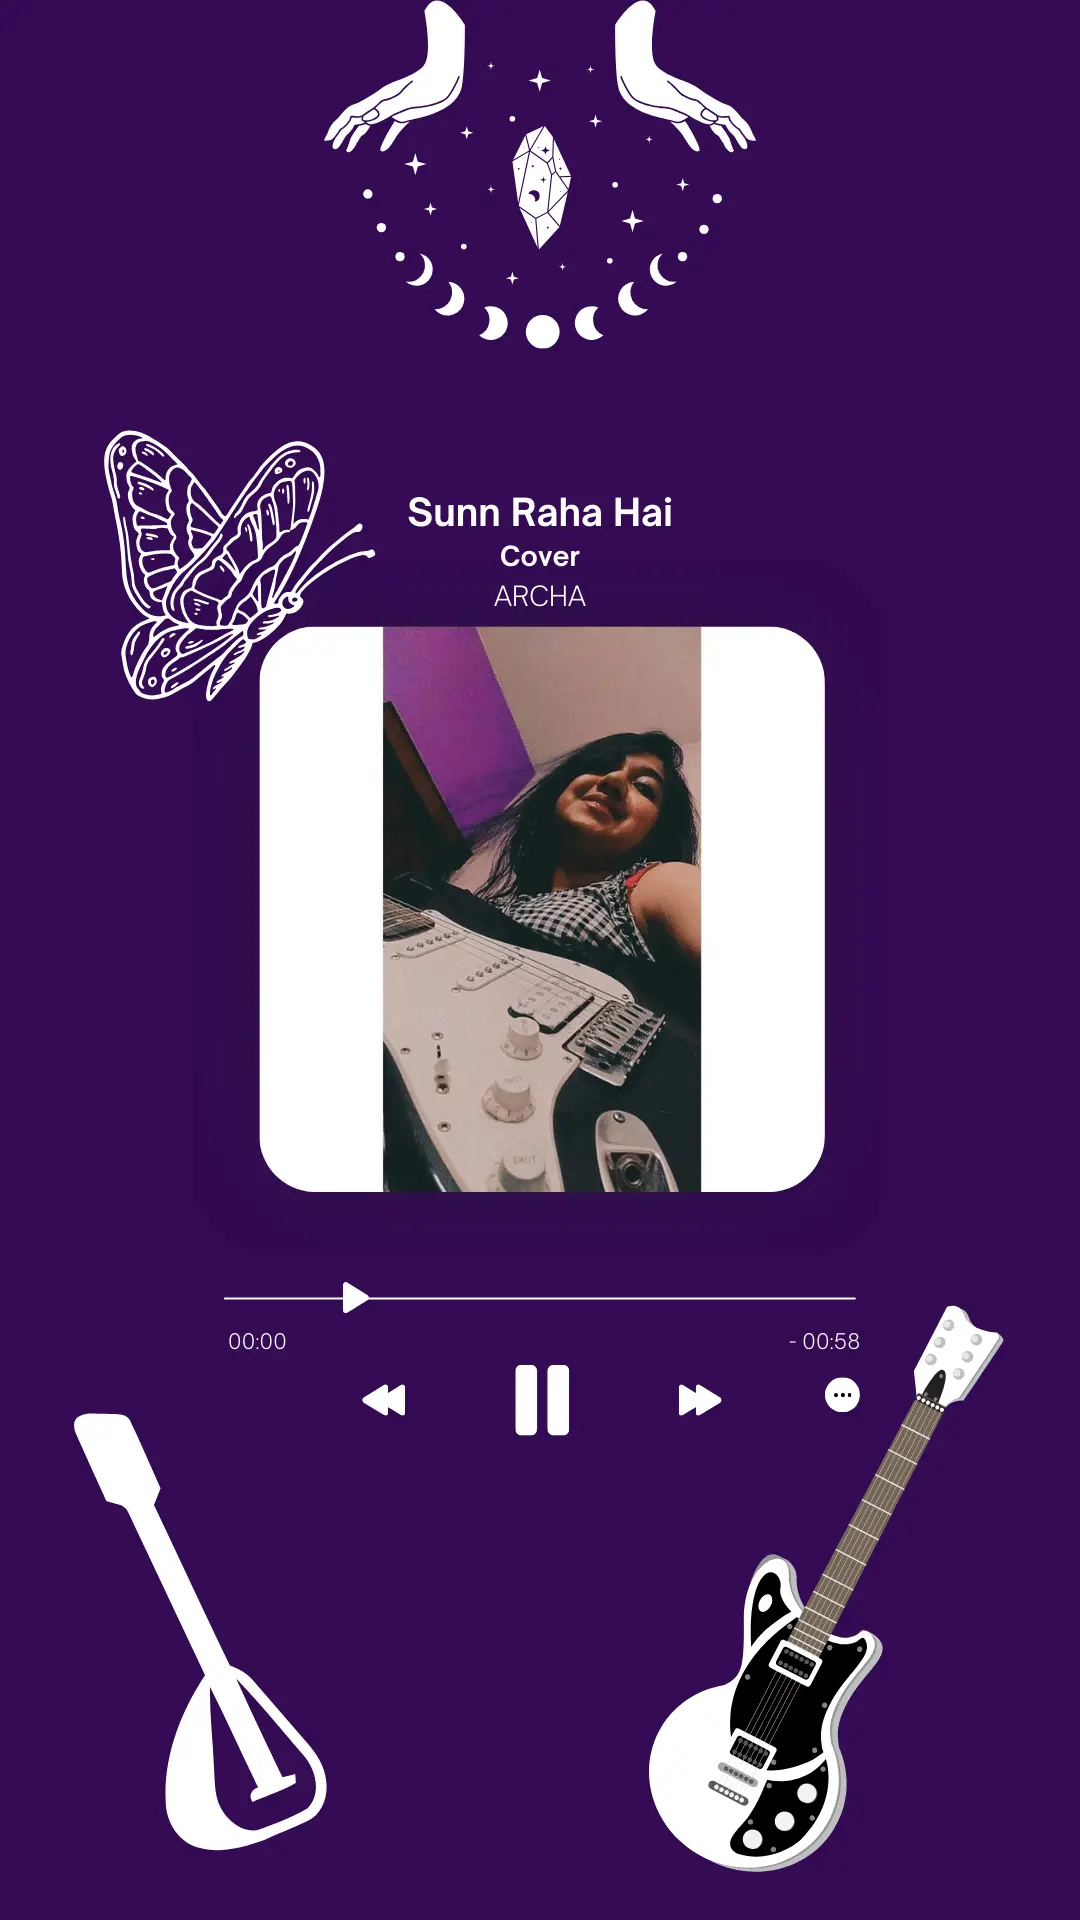 Sunn Raha Hai Cover